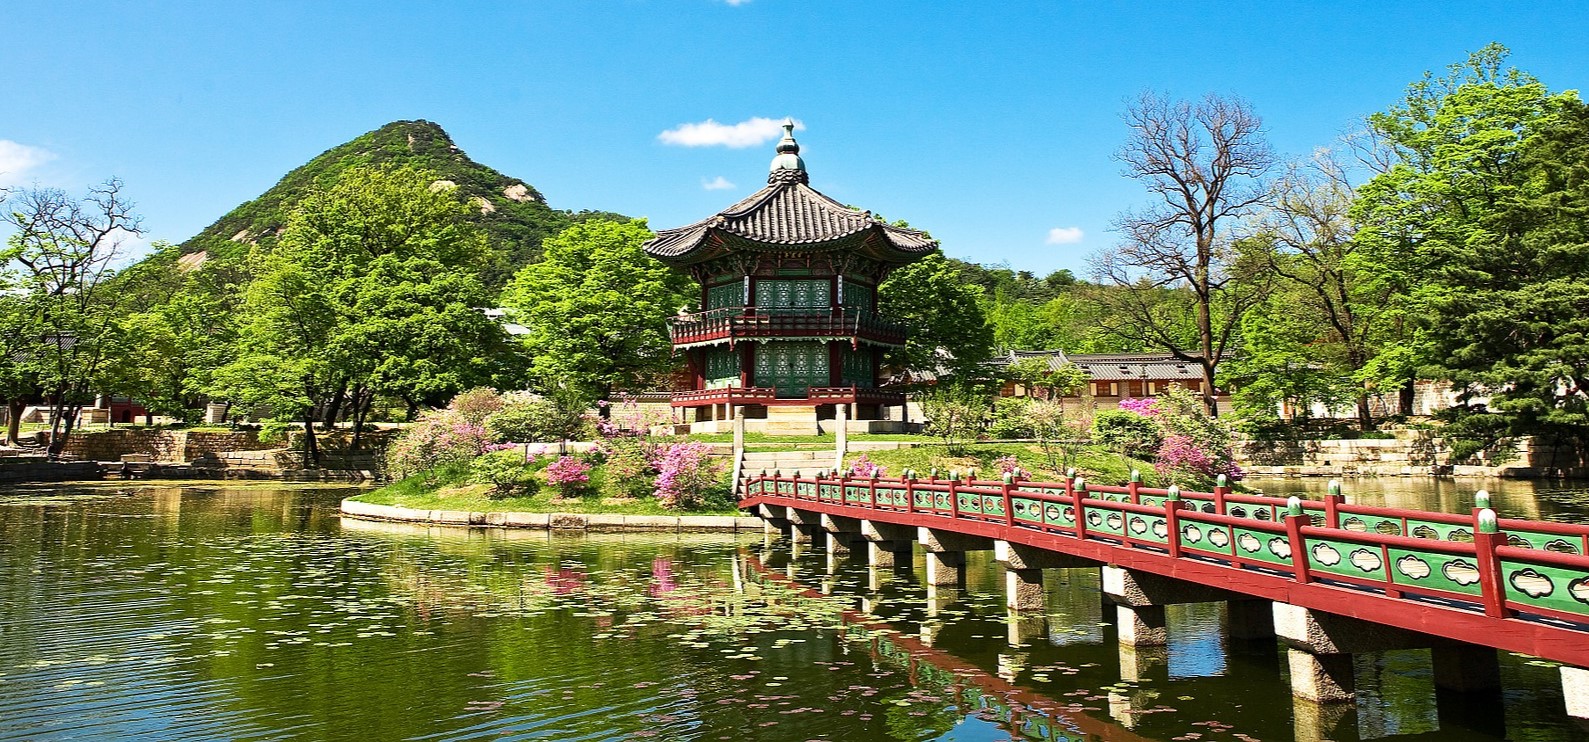 Seoul garden in South Korea